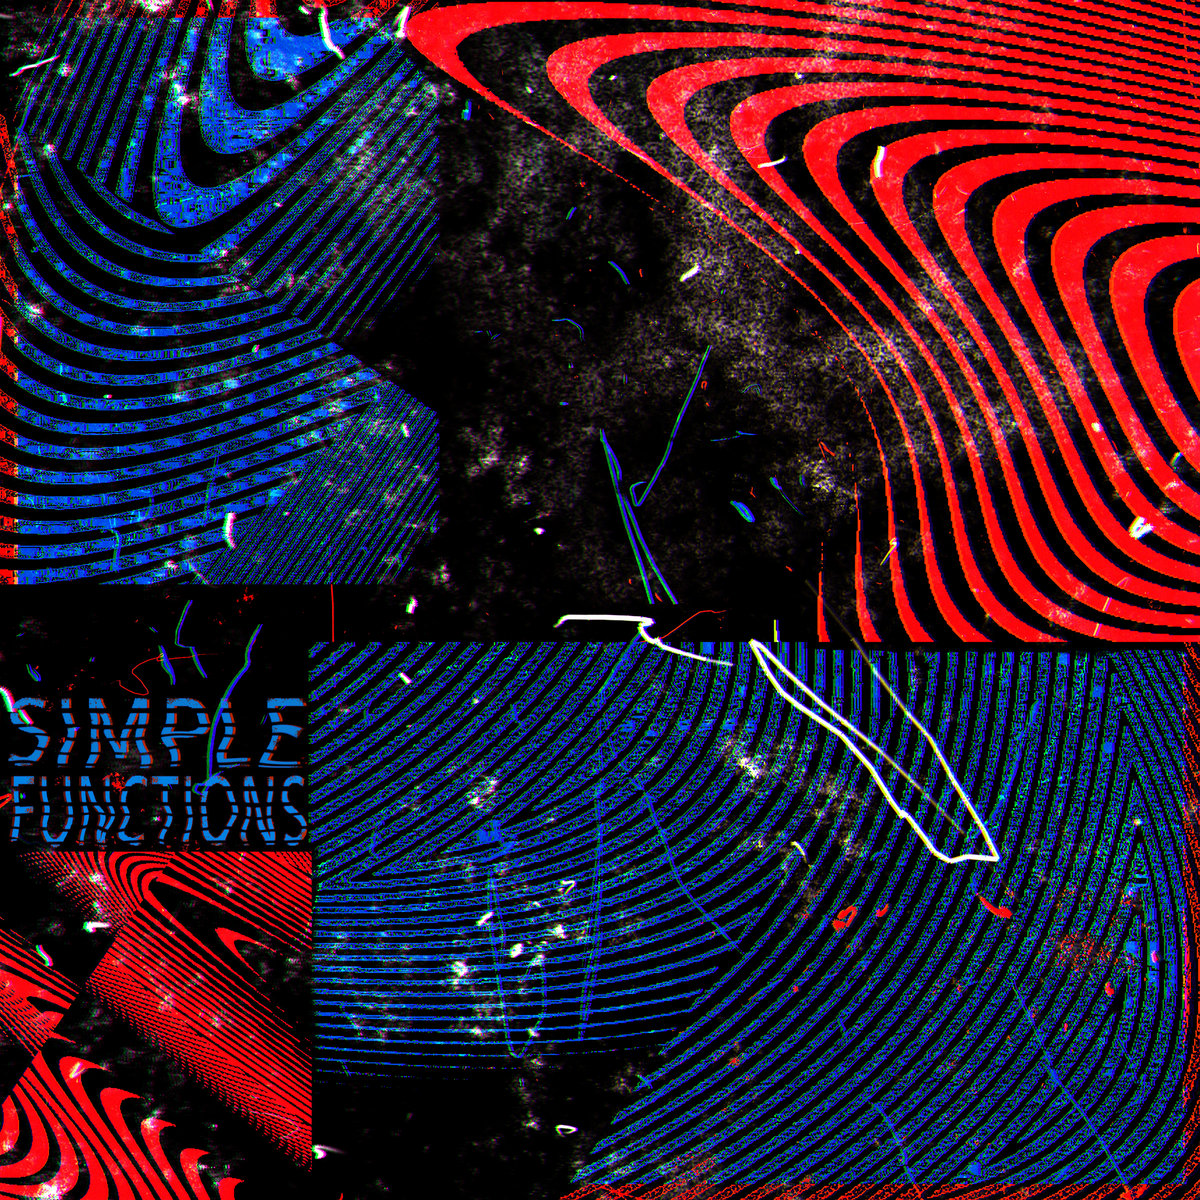 Squidge - 'Simple Functions' (Single)